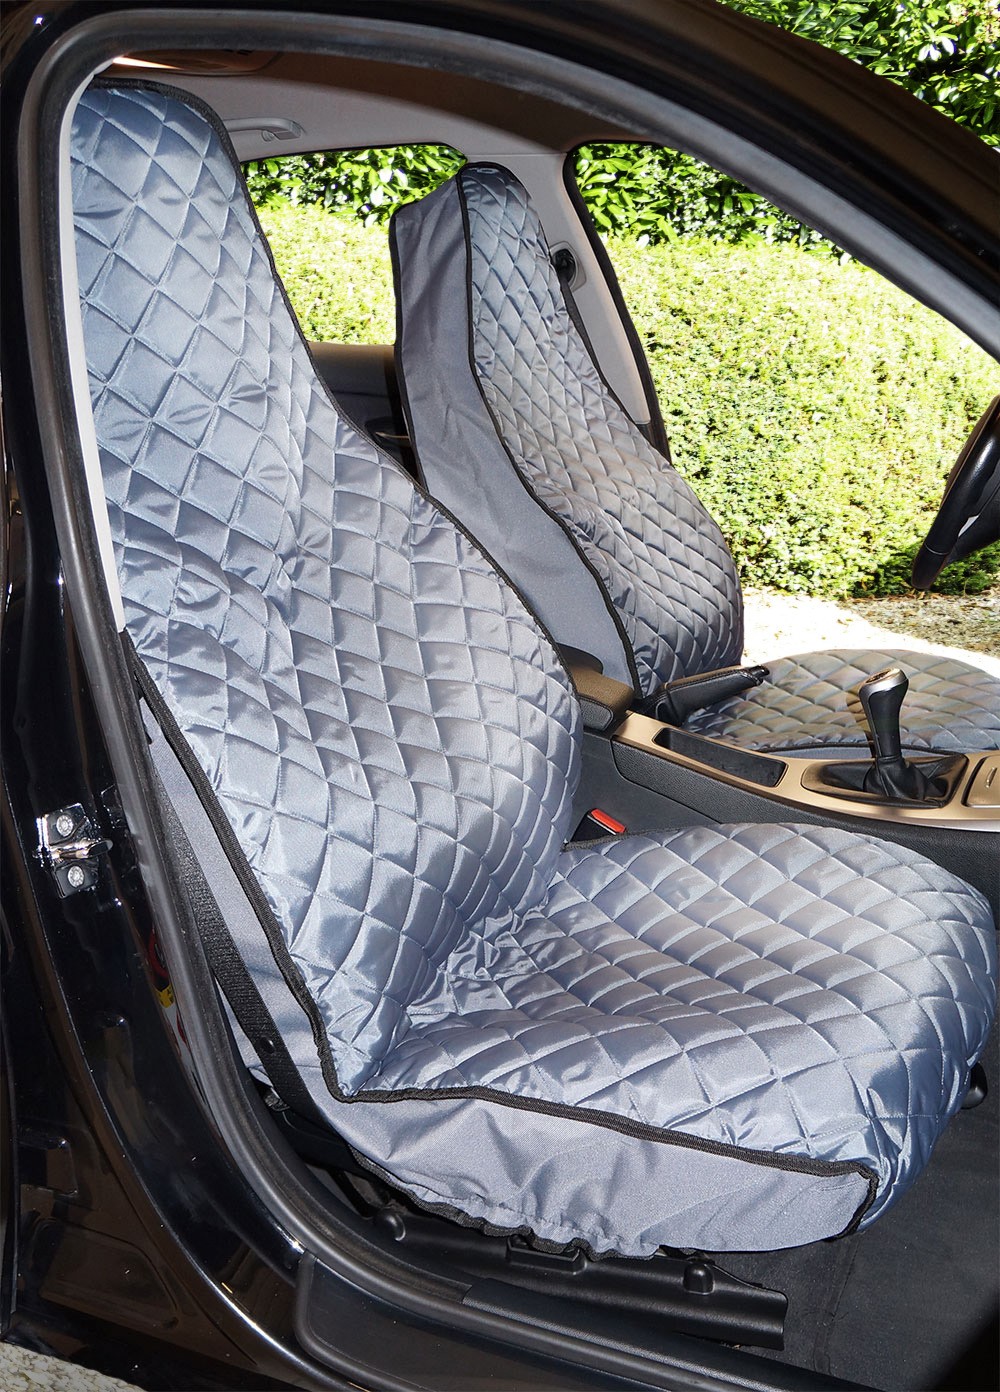 Jaguar R CAR SEAT COVERS PROTECTORS SPORTS BUCKET HEAVYDUTY Fits F-Type R 